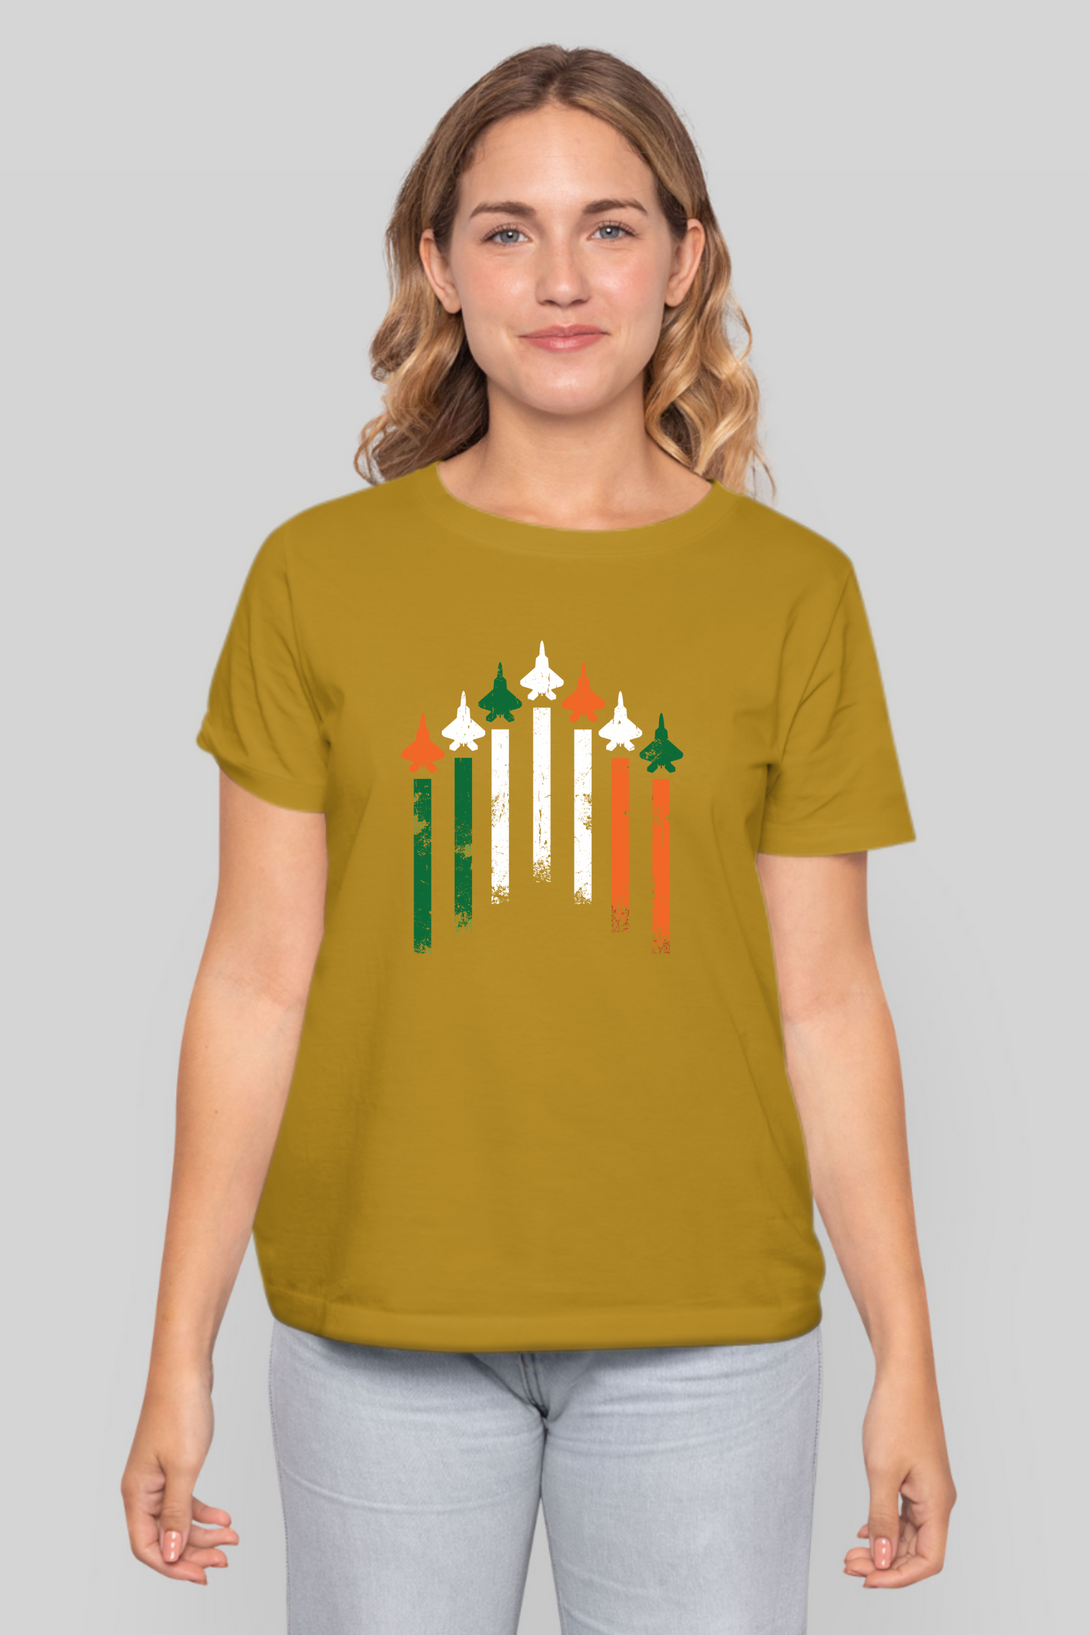 Italian National Printed T-Shirt For Women - WowWaves - 7